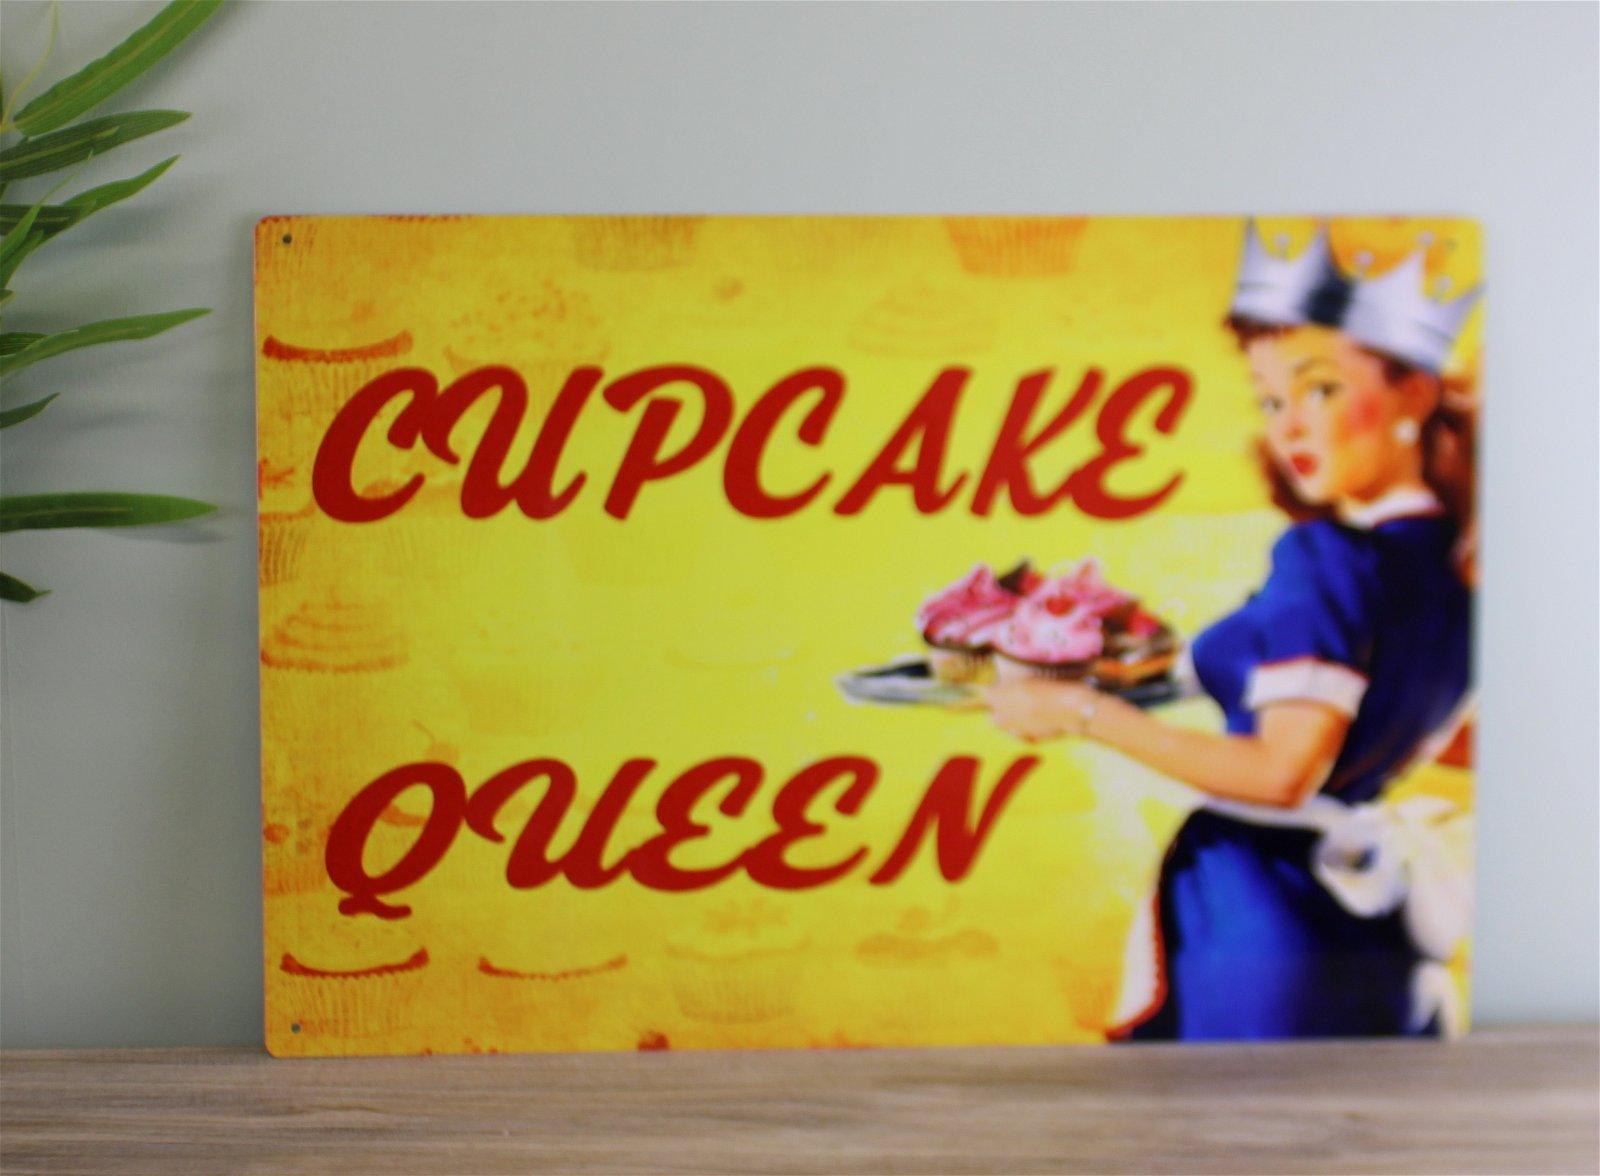 Vintage Metal Sign - Pin Up Girl, Cupcake Queen - £27.99 - Retro Advertising 